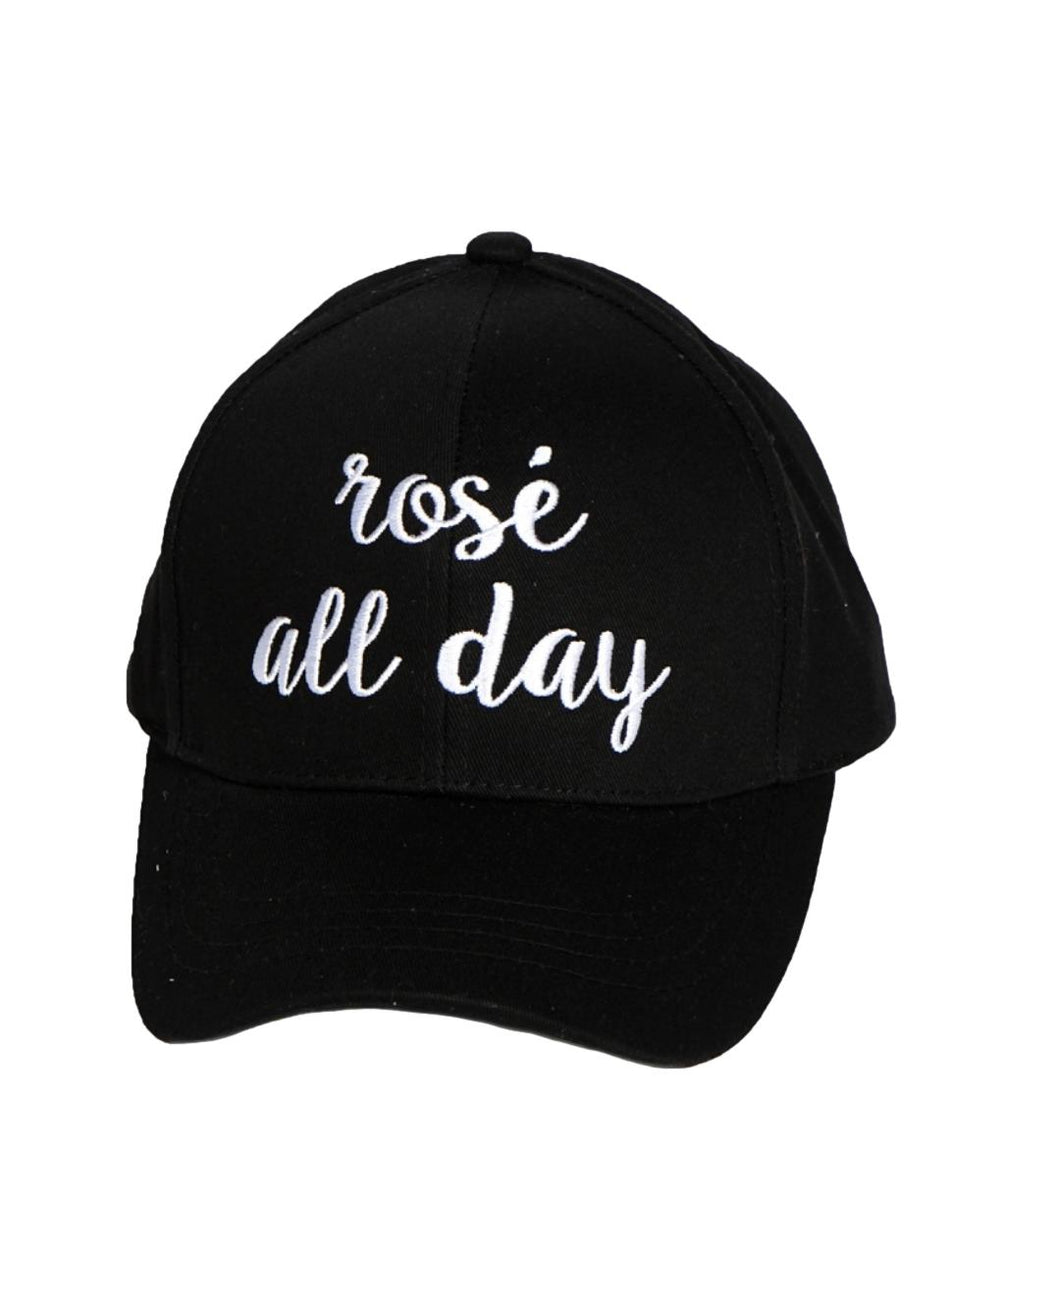 Women's Black Embroidered Baseball Hat 